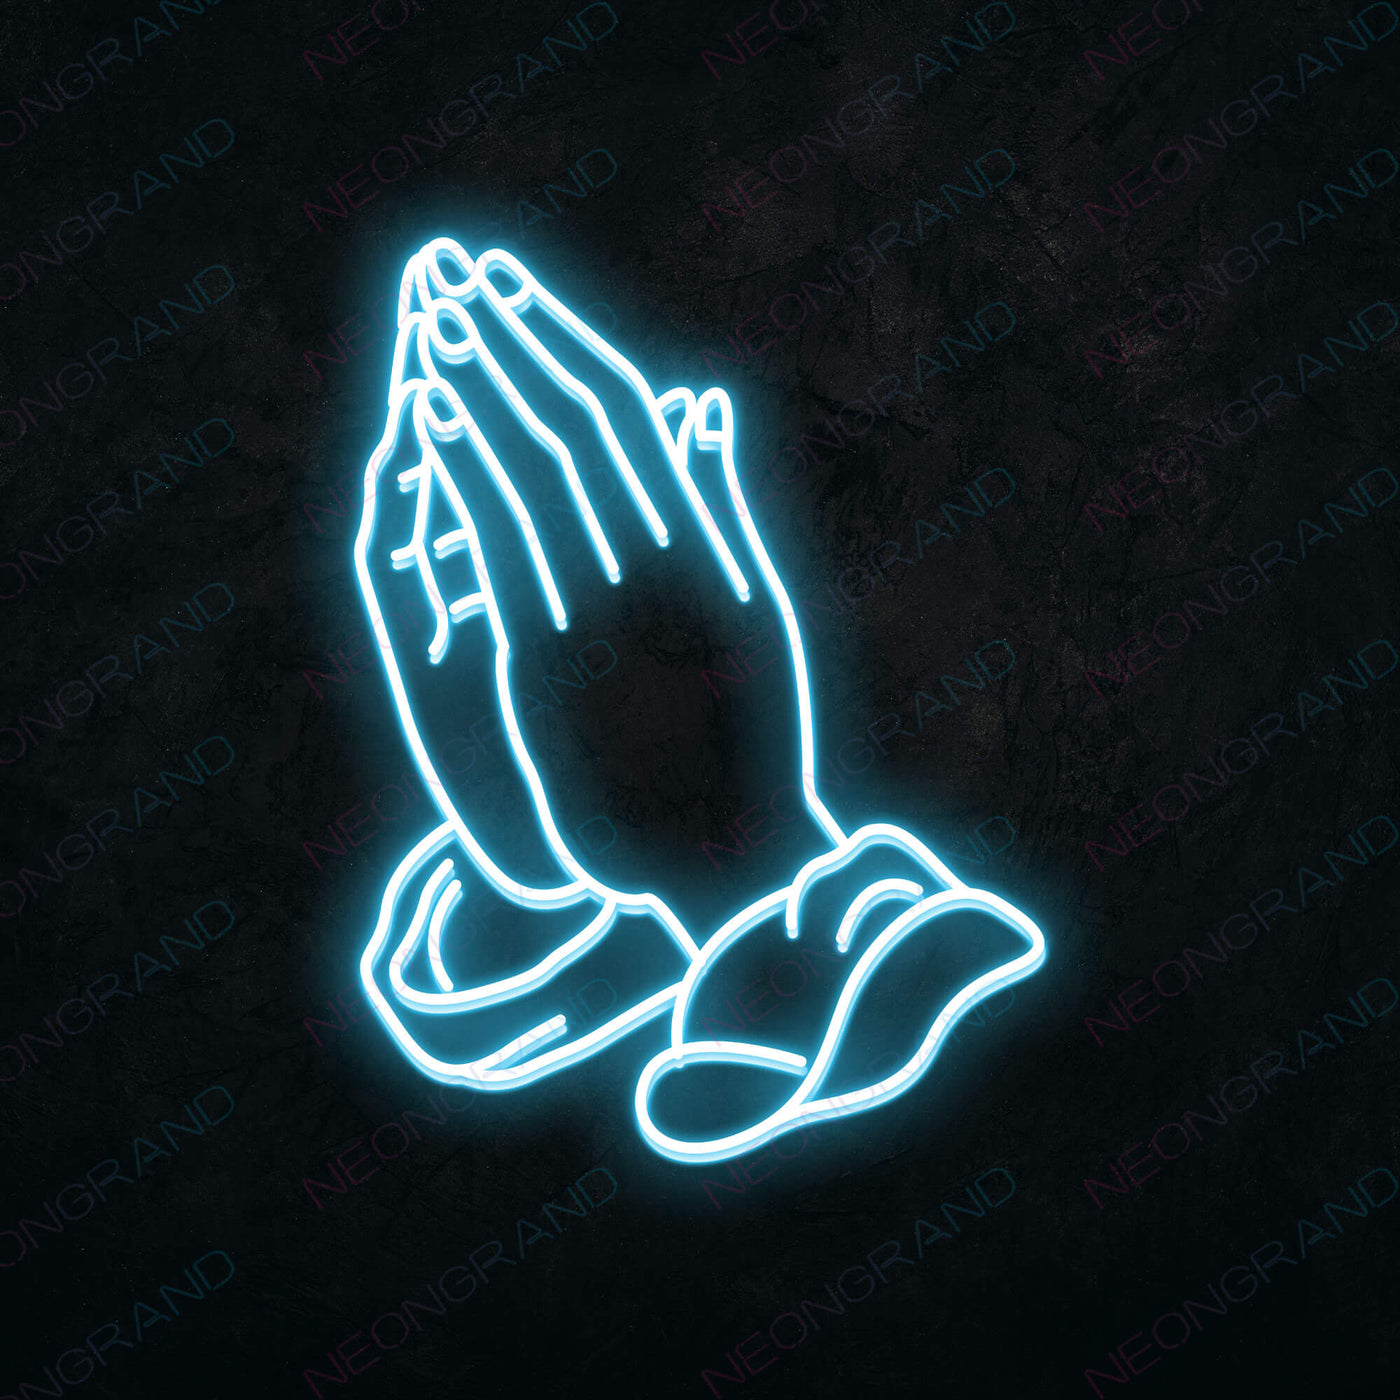 Neon Praying Hands Sign Led Light light blue